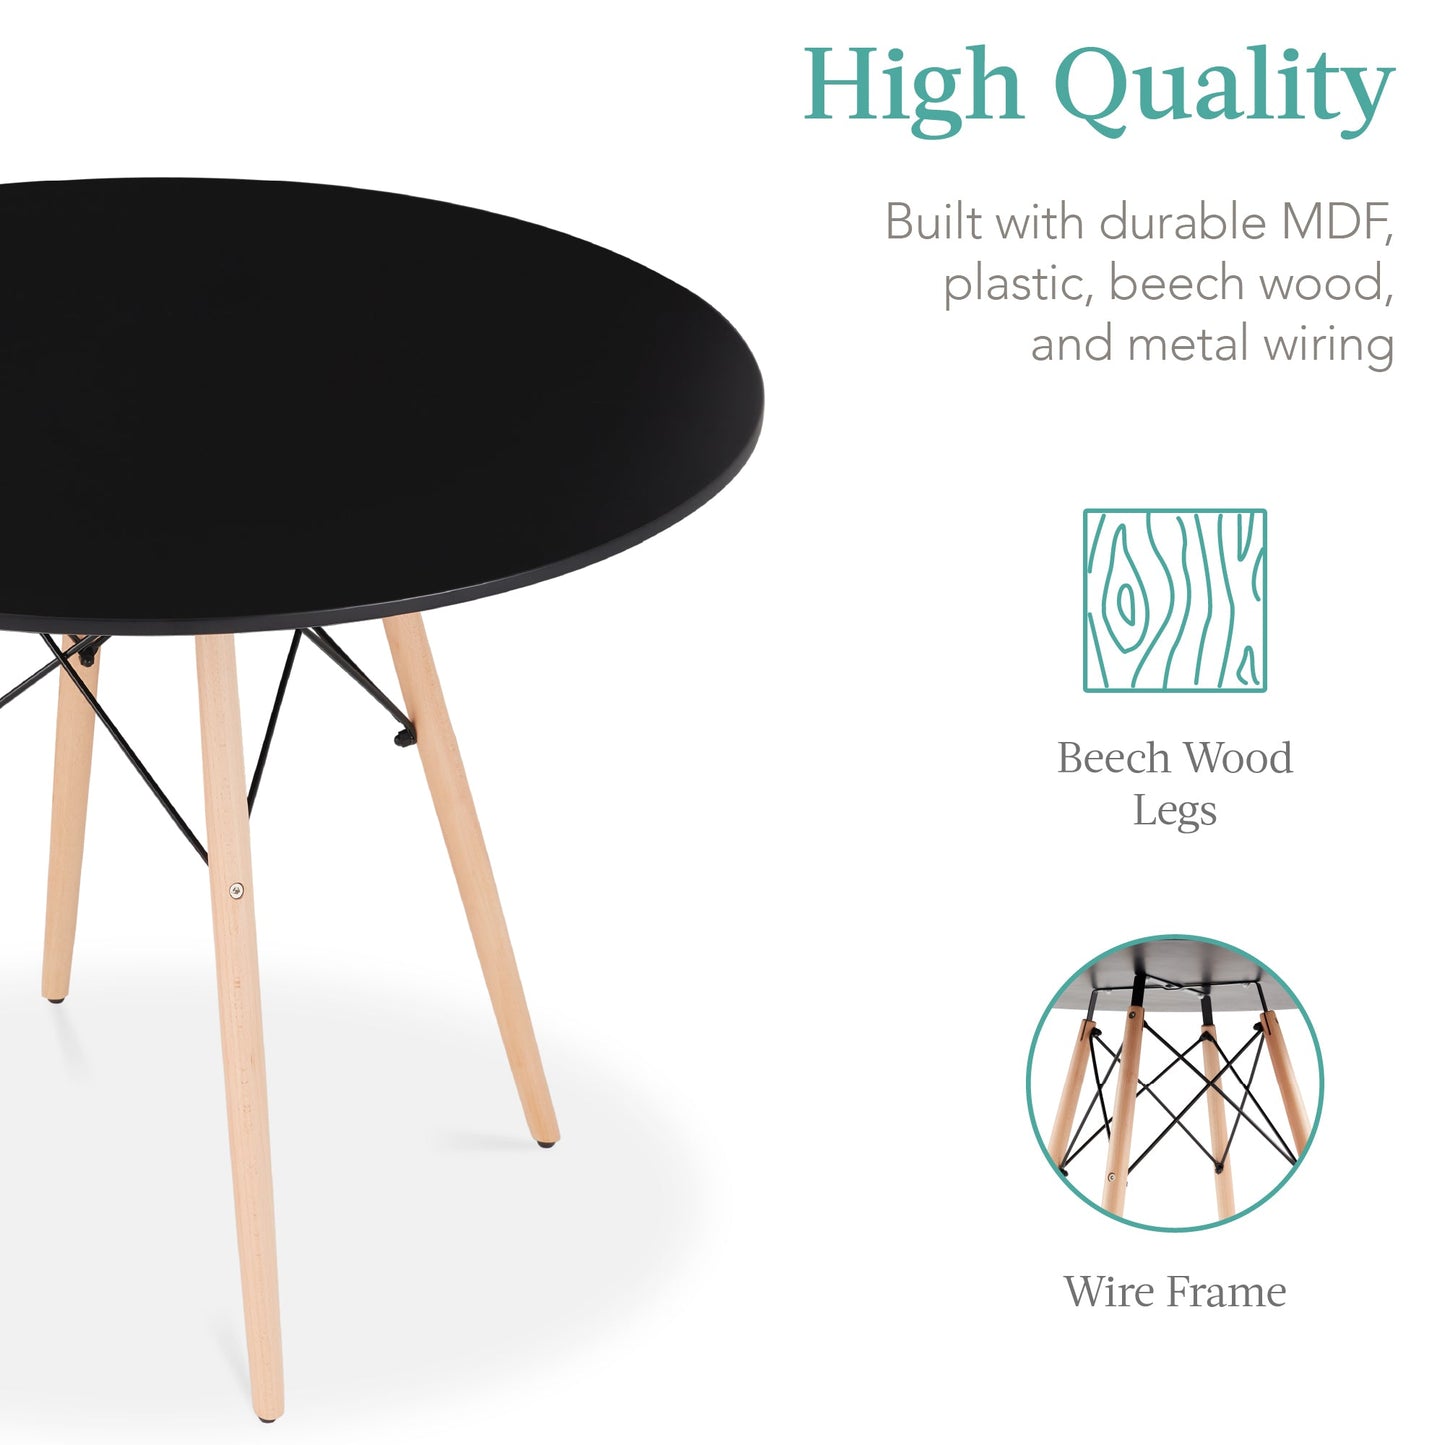 5-Piece Mid-Century Modern Dining Set w/ 4 Chairs, Wooden Legs, Metal Frame